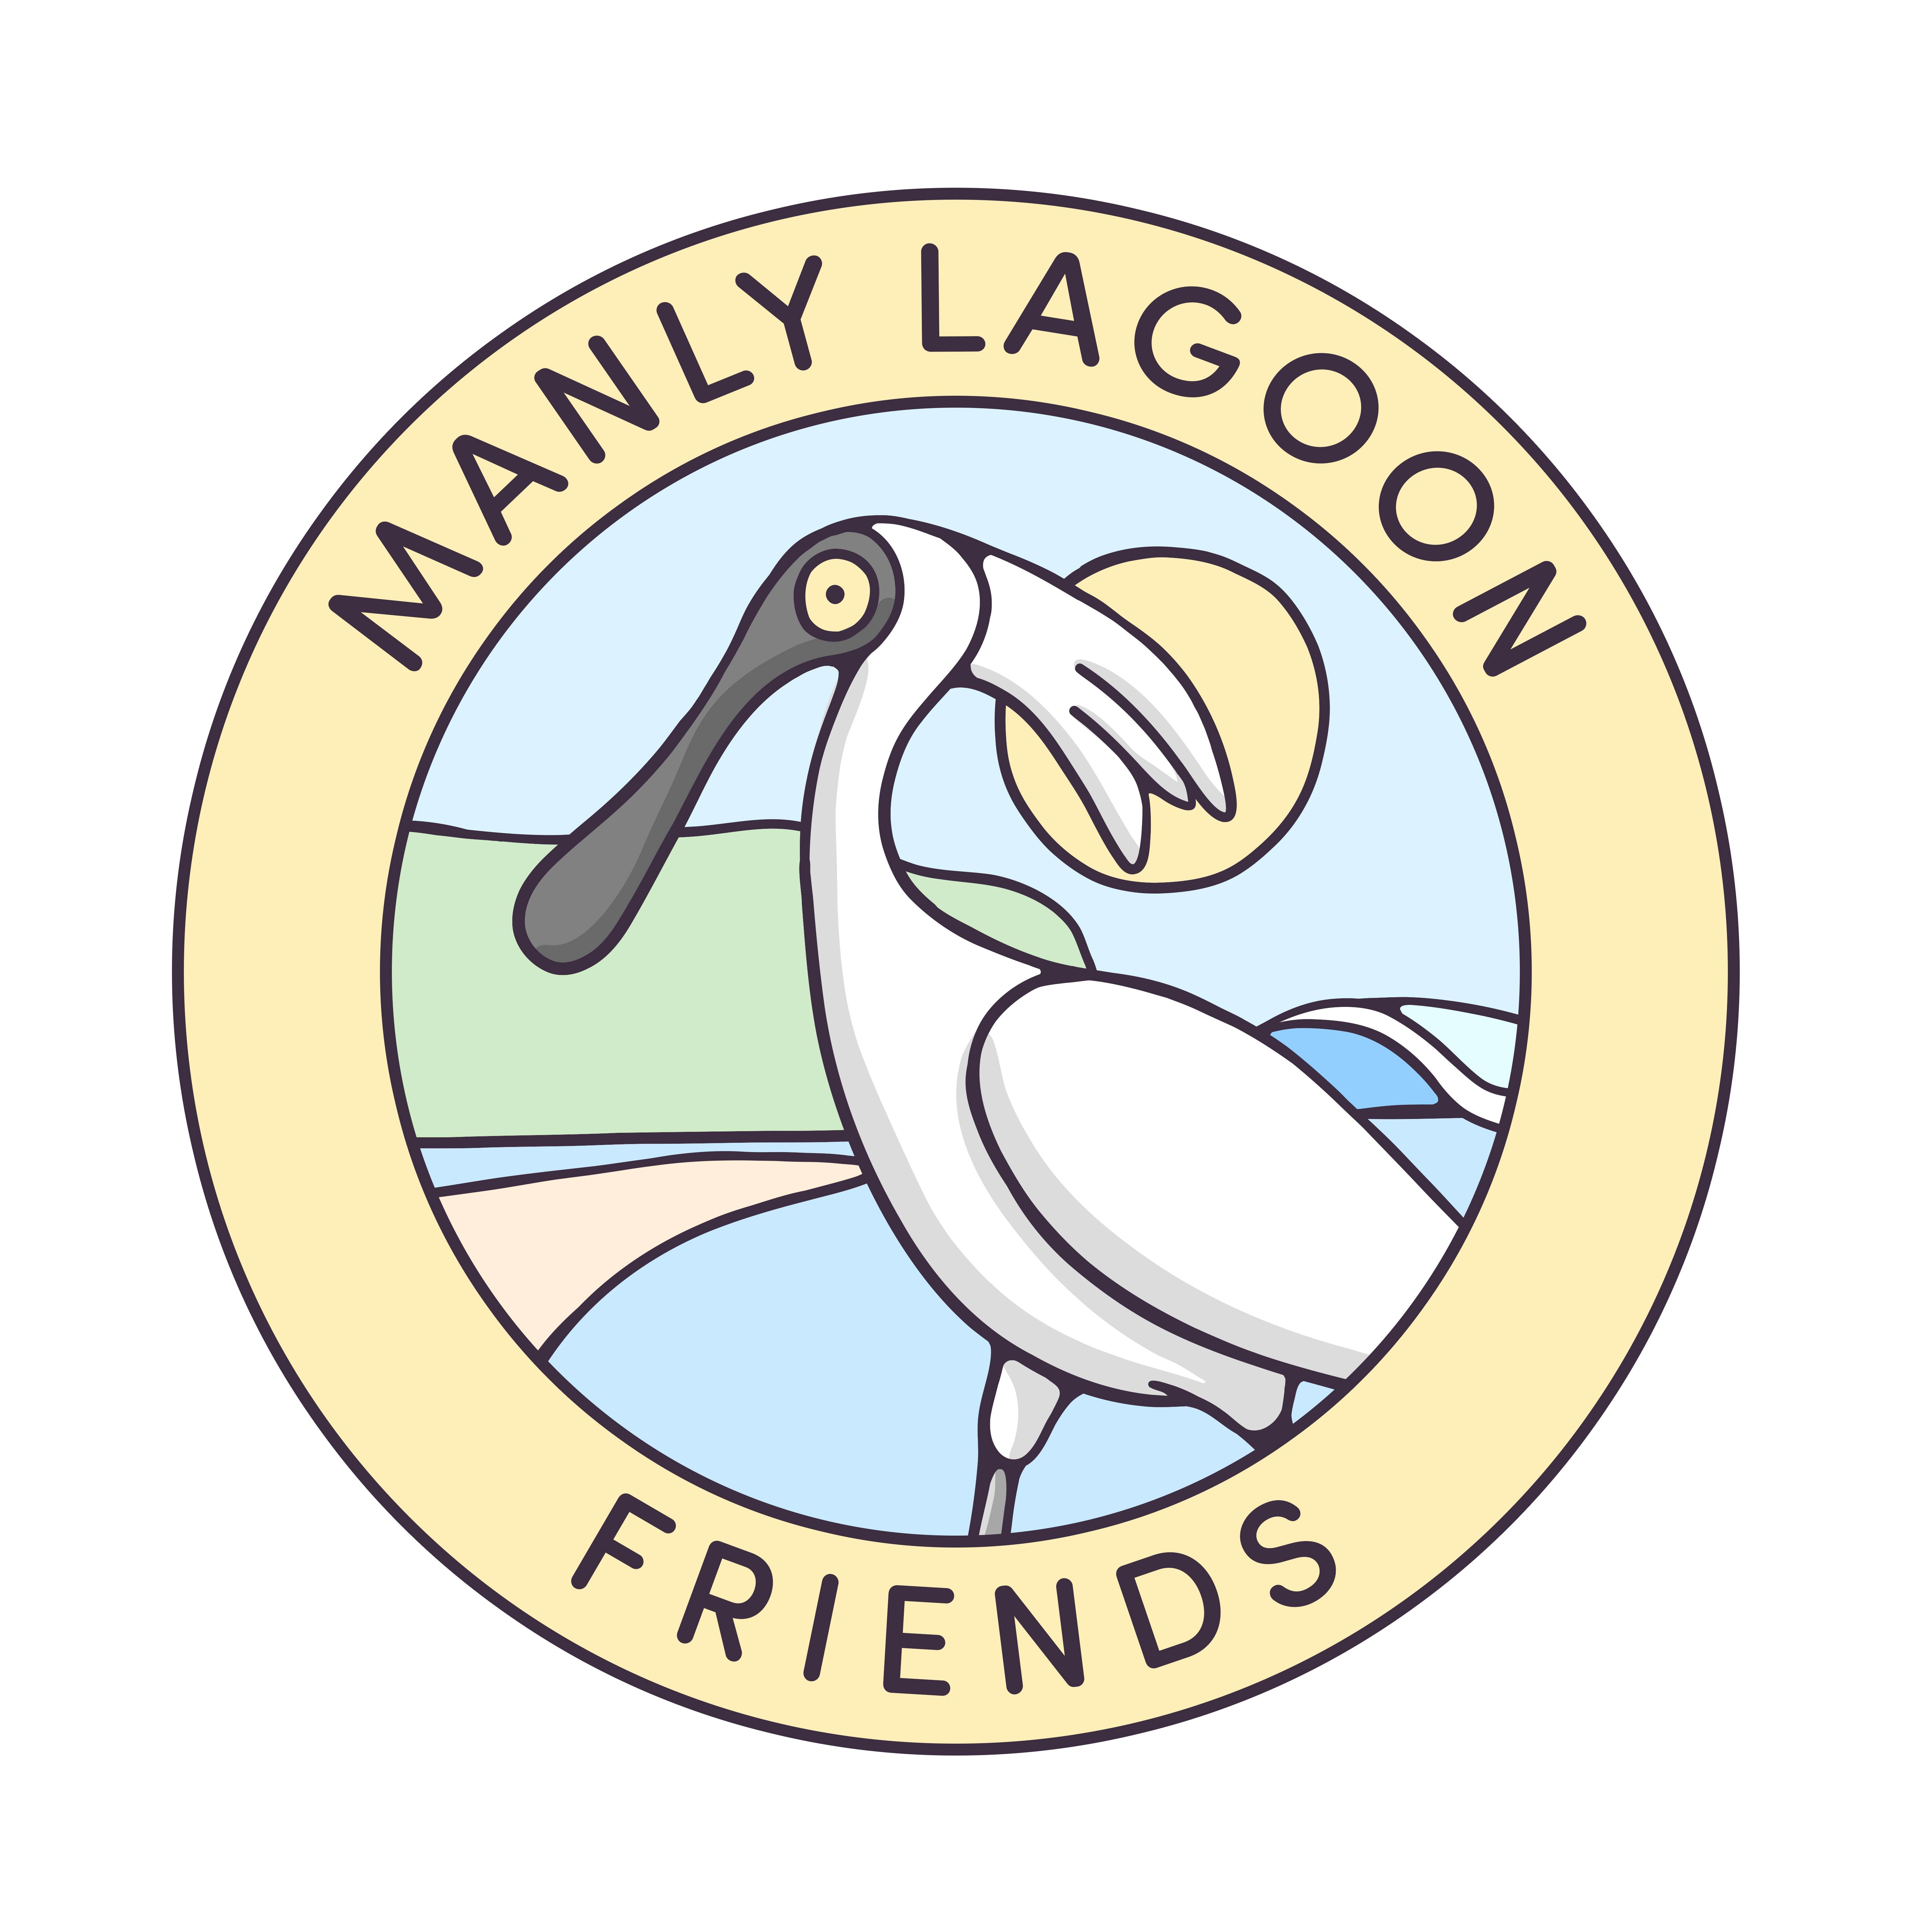 Manly Lagoon Friends logo